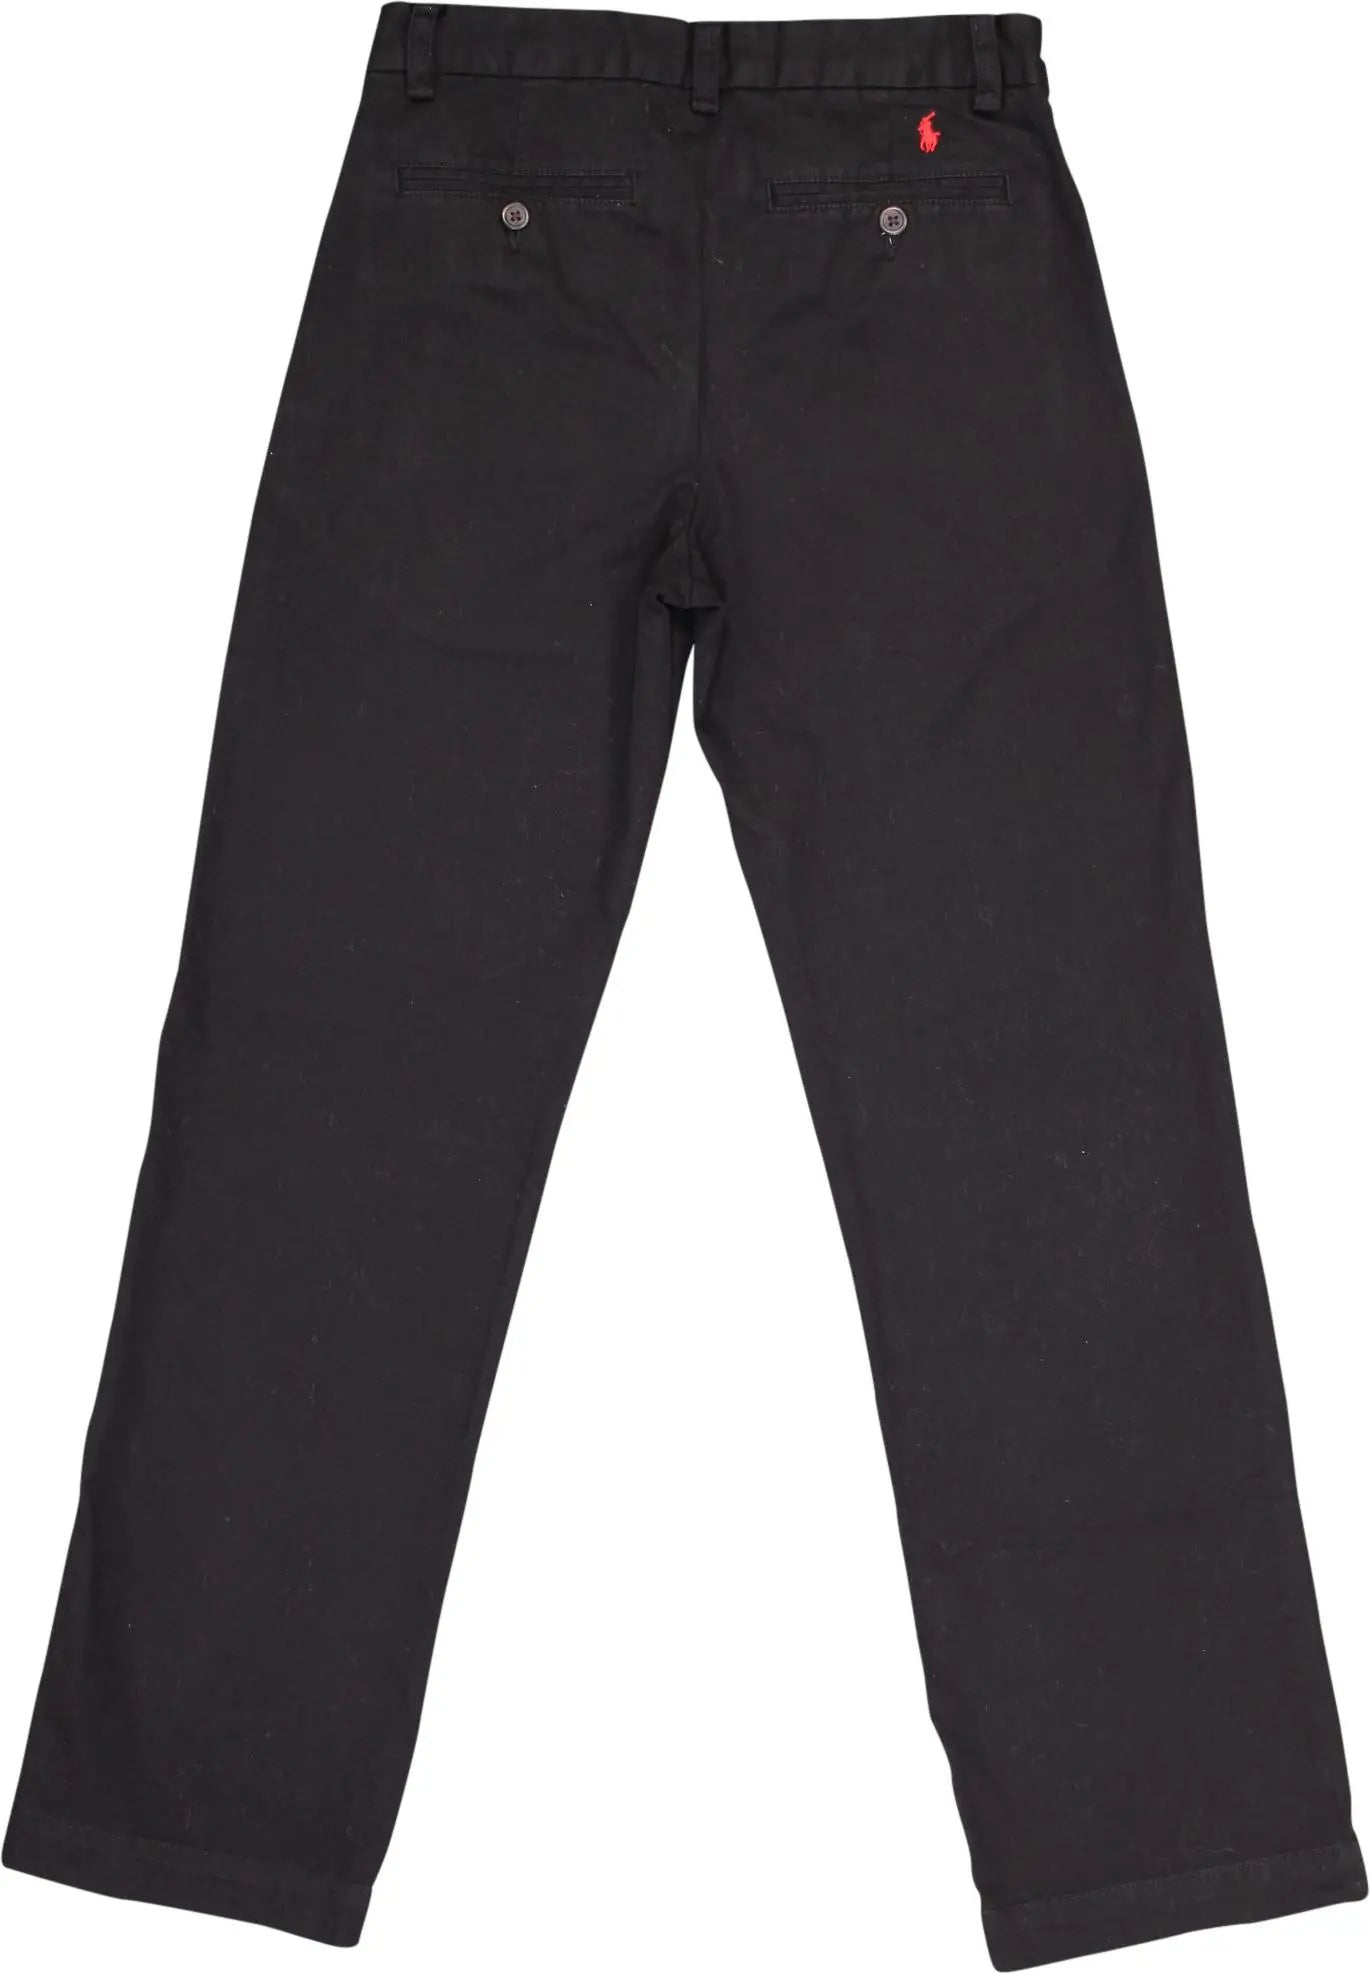 Ralph Lauren - Black Trousers by Ralph Lauren- ThriftTale.com - Vintage and second handclothing